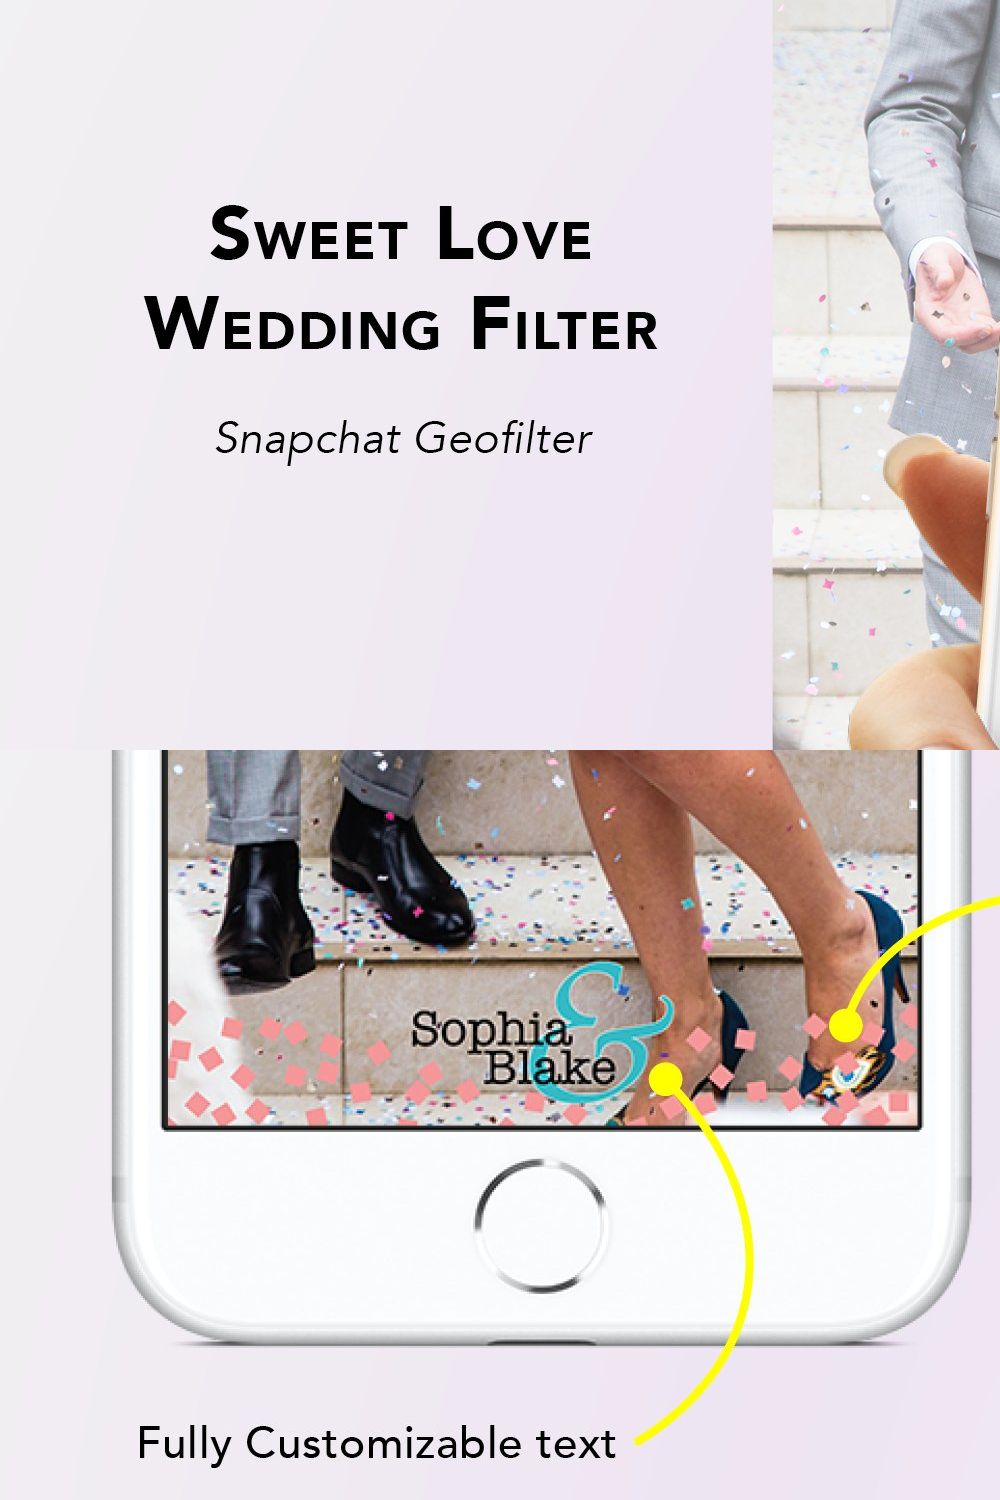 Sweet Love Wedding Geofilter pinterest preview image.